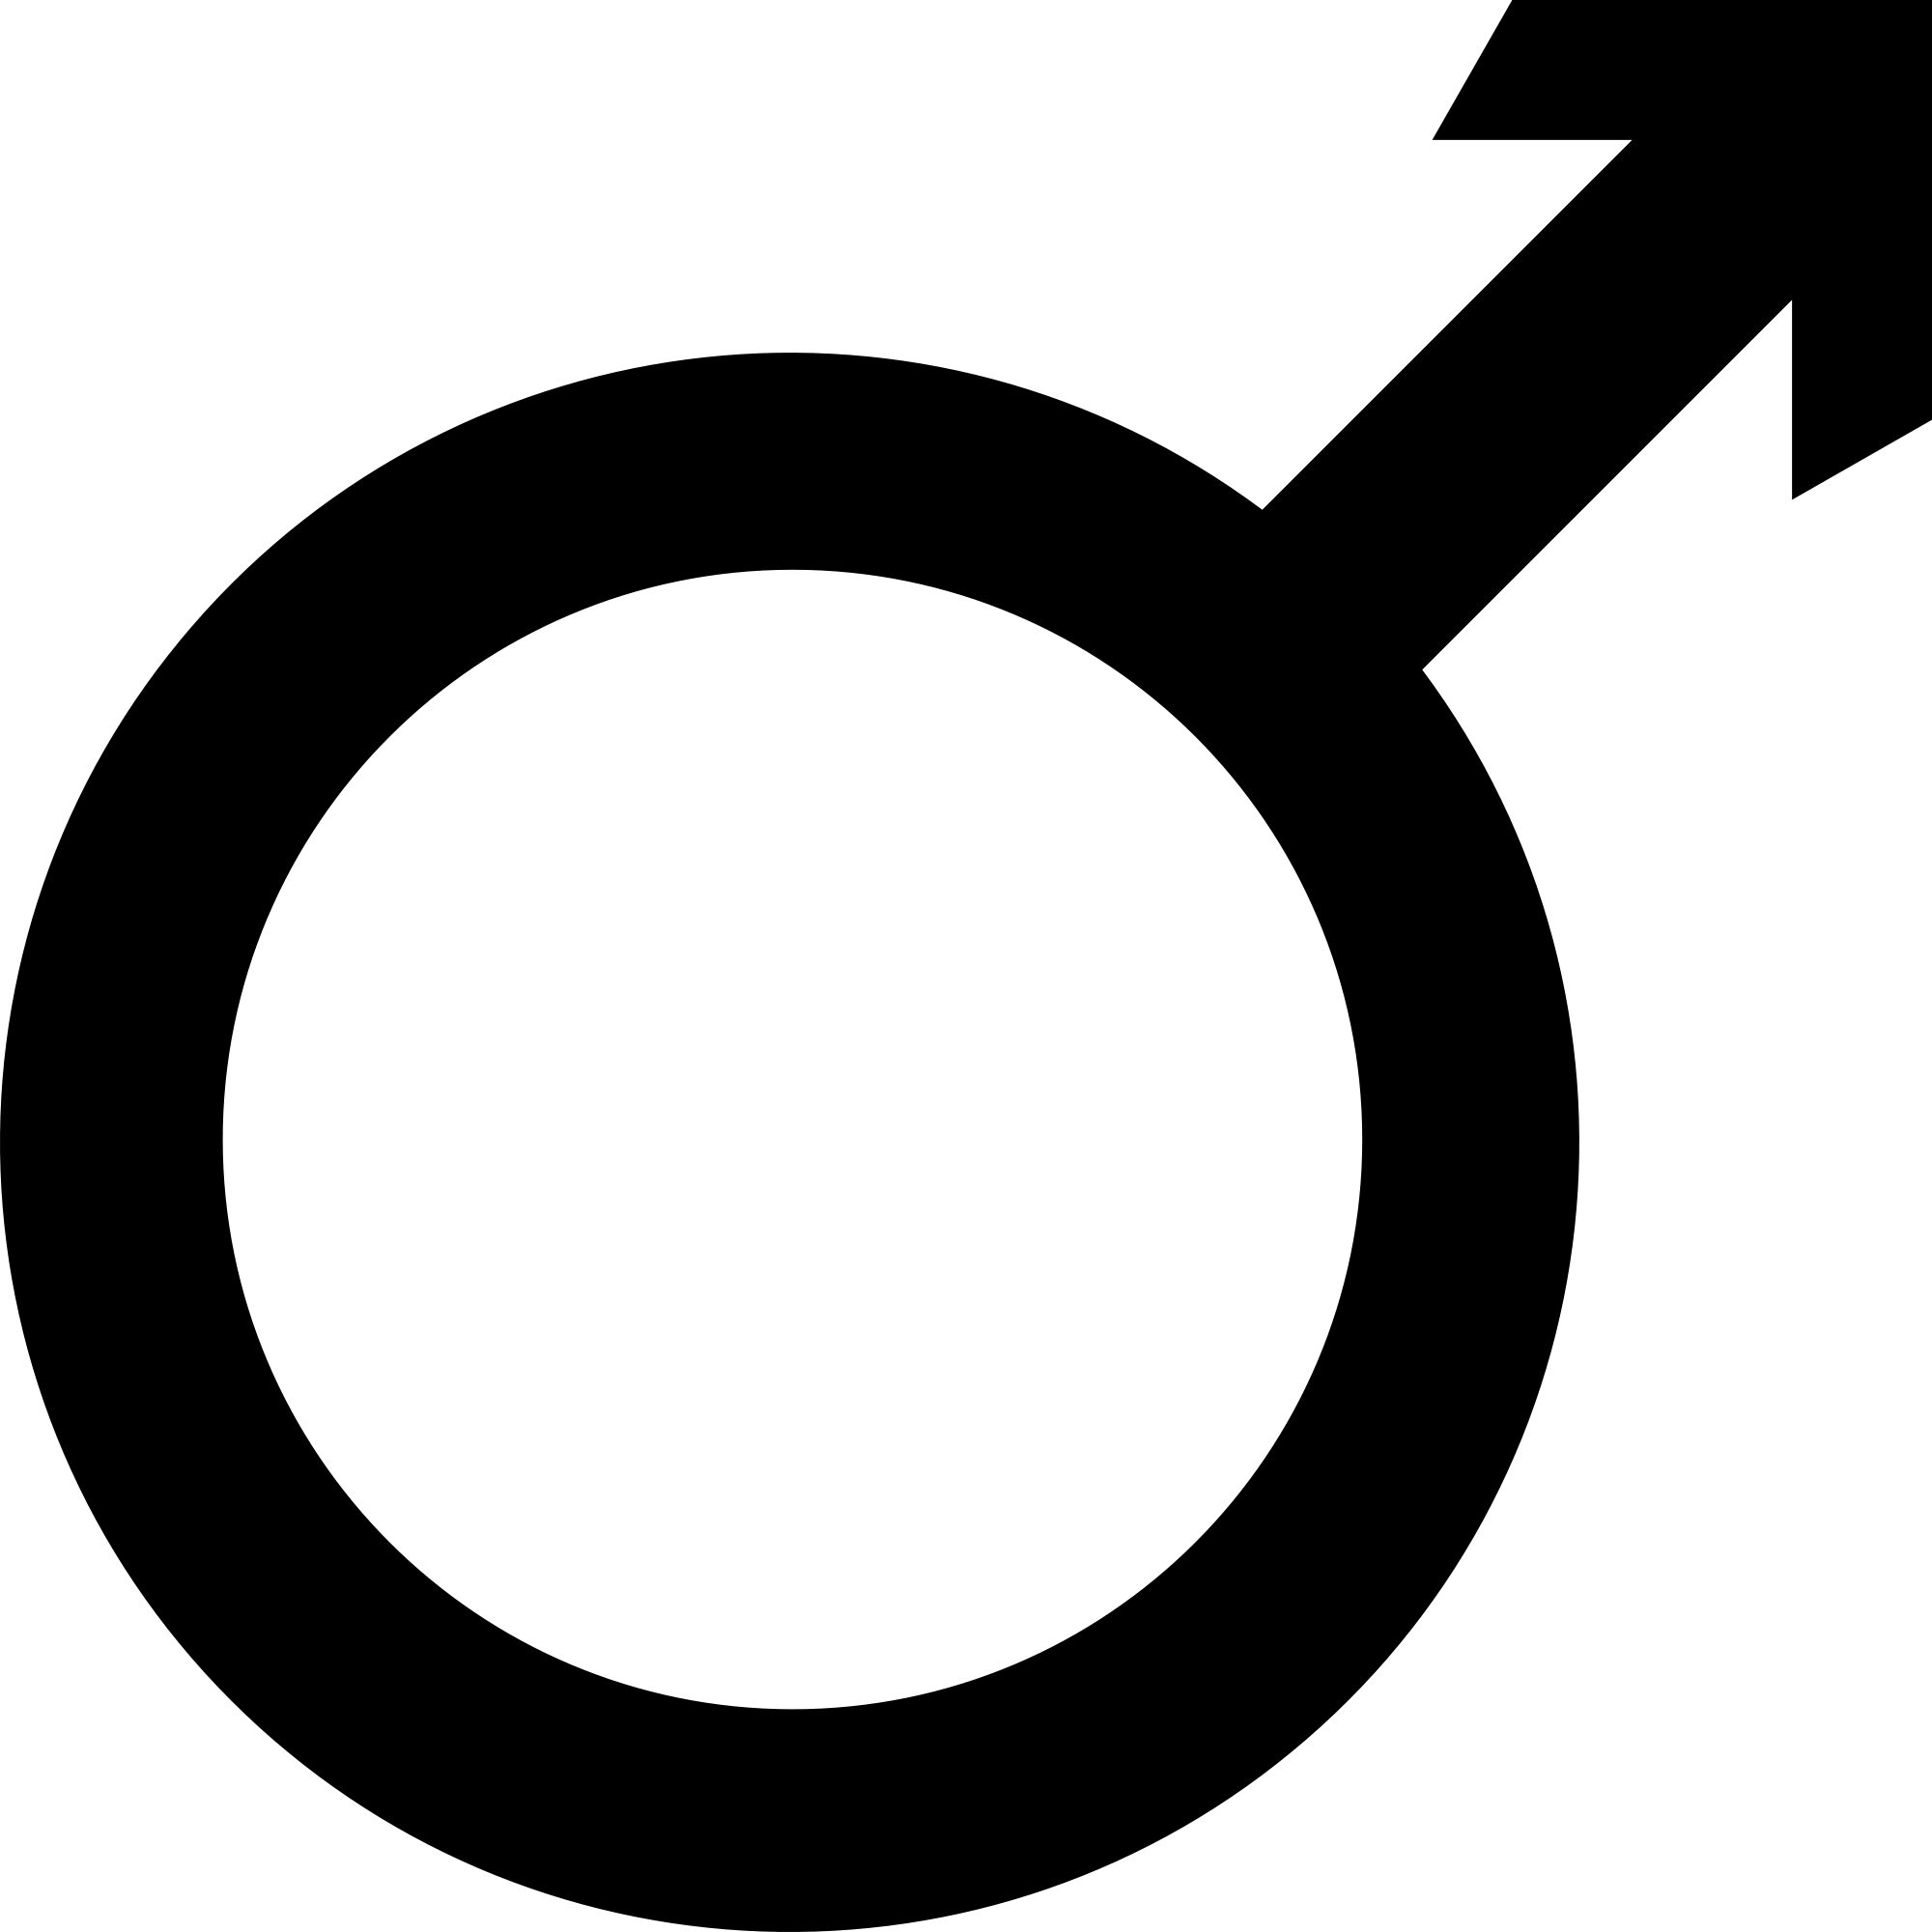 File:Male black symbol.svg - Wikimedia Commons